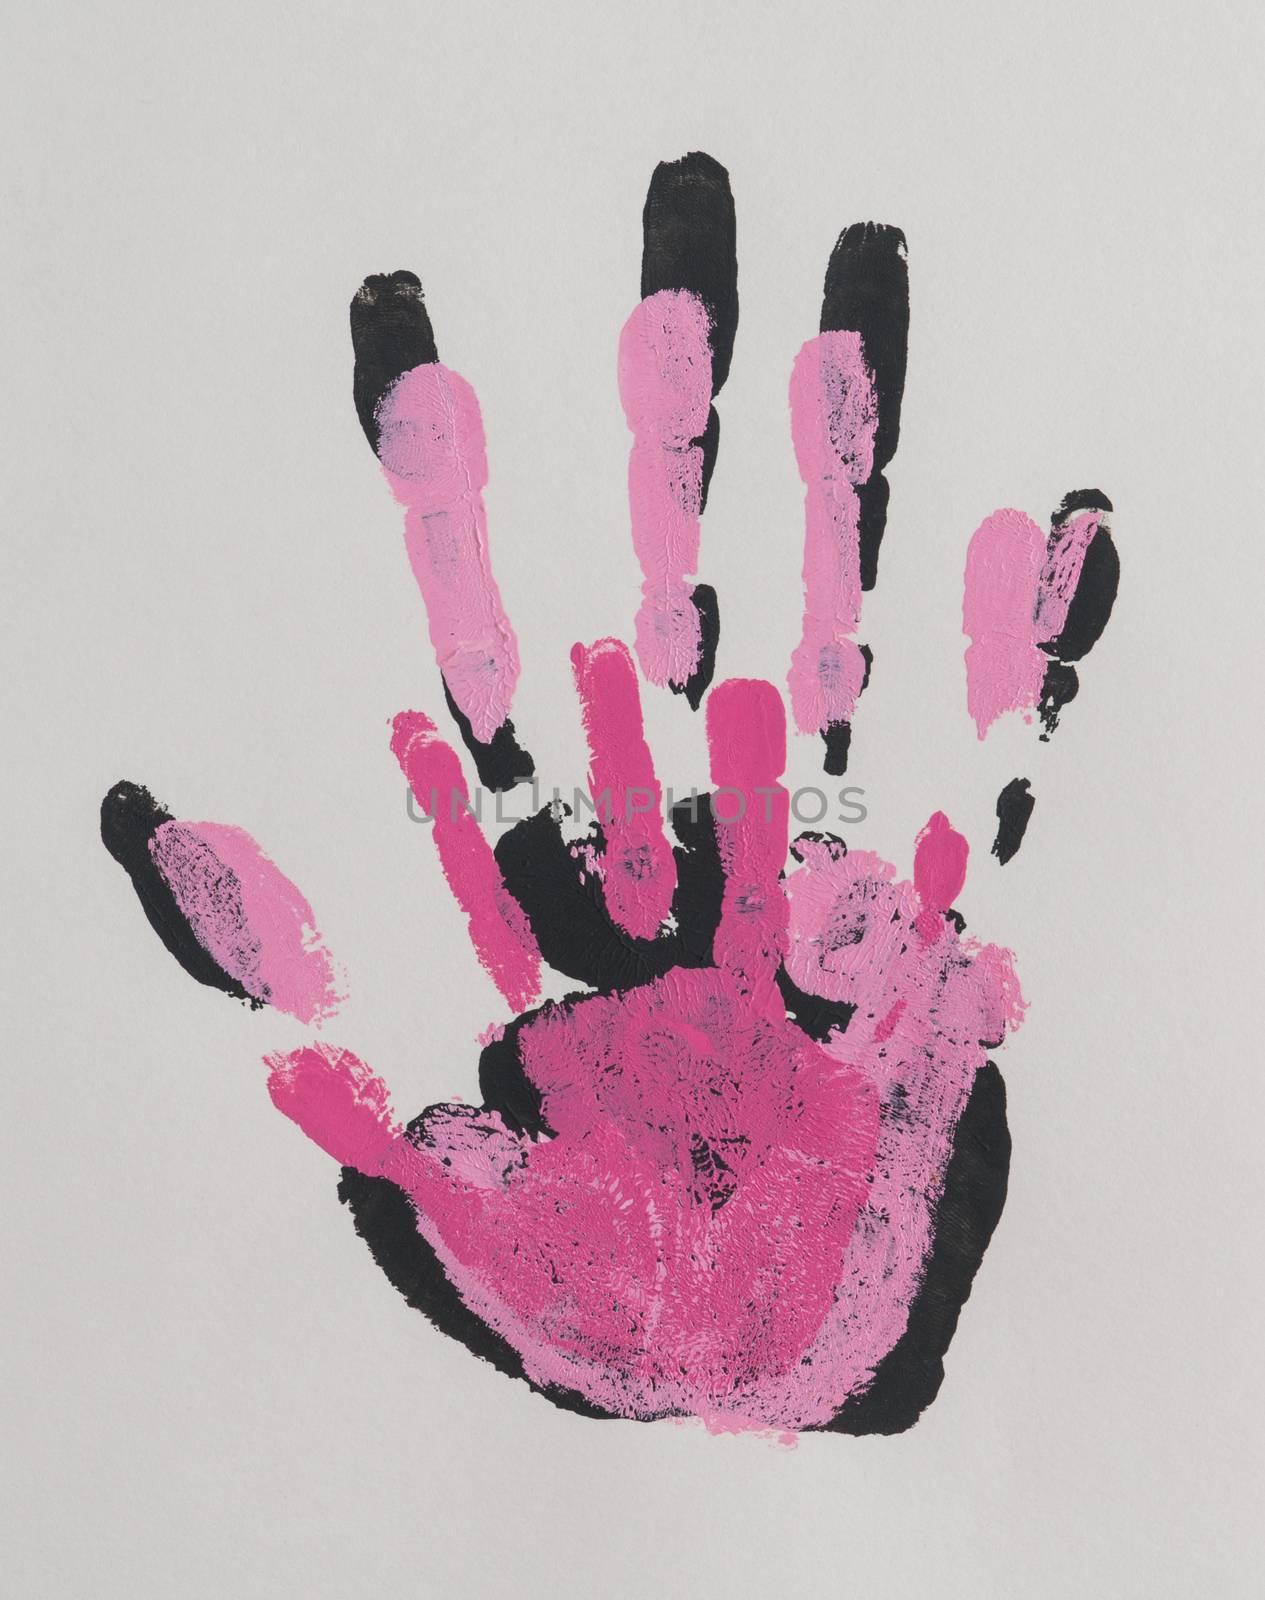 handprint on paper by A_Karim